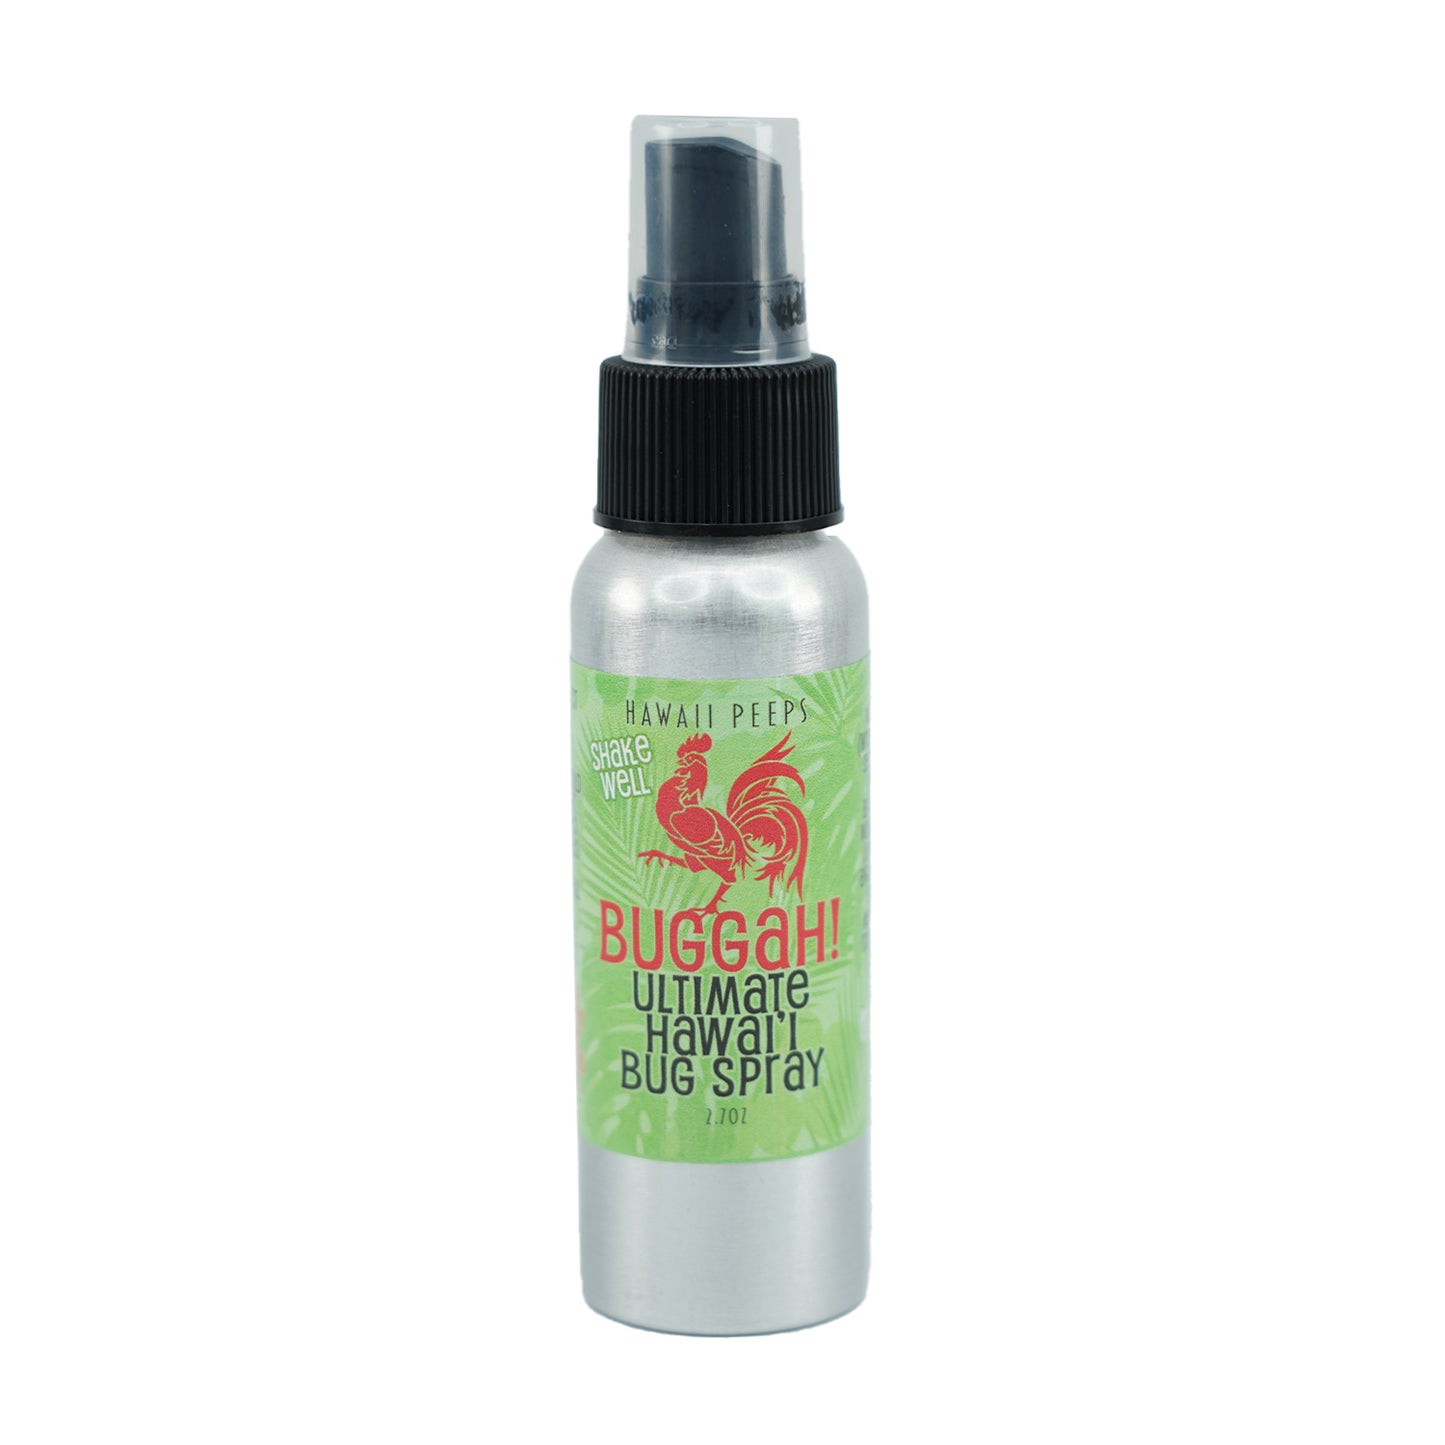 BUGGAH! Natural Lemongrass Insect Repellent Spray Bottle 2.7oz